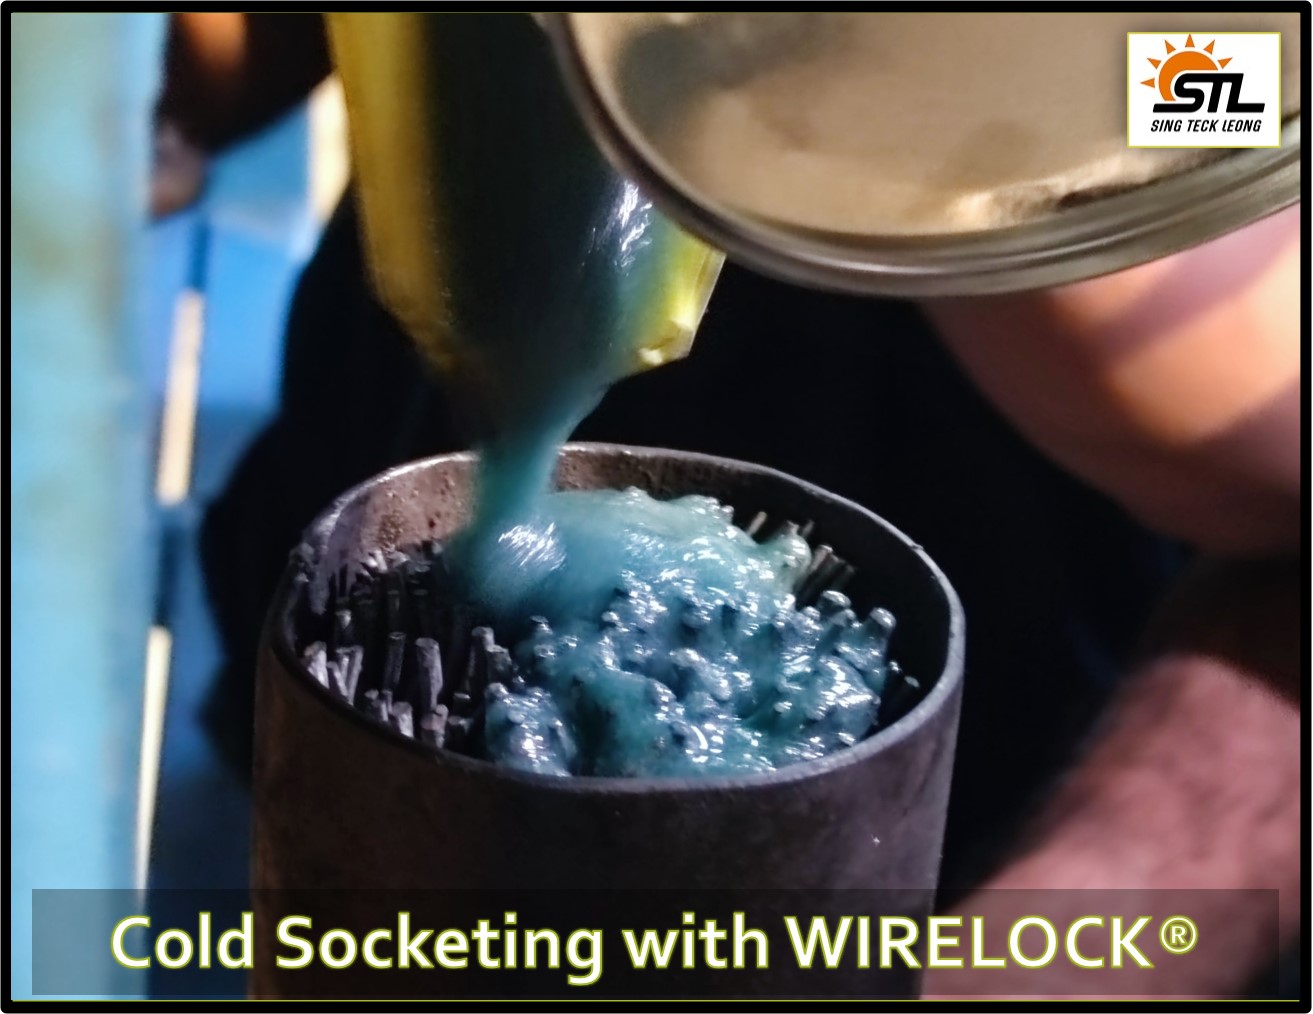 Performing Cold Socketing - using WIRELOCK